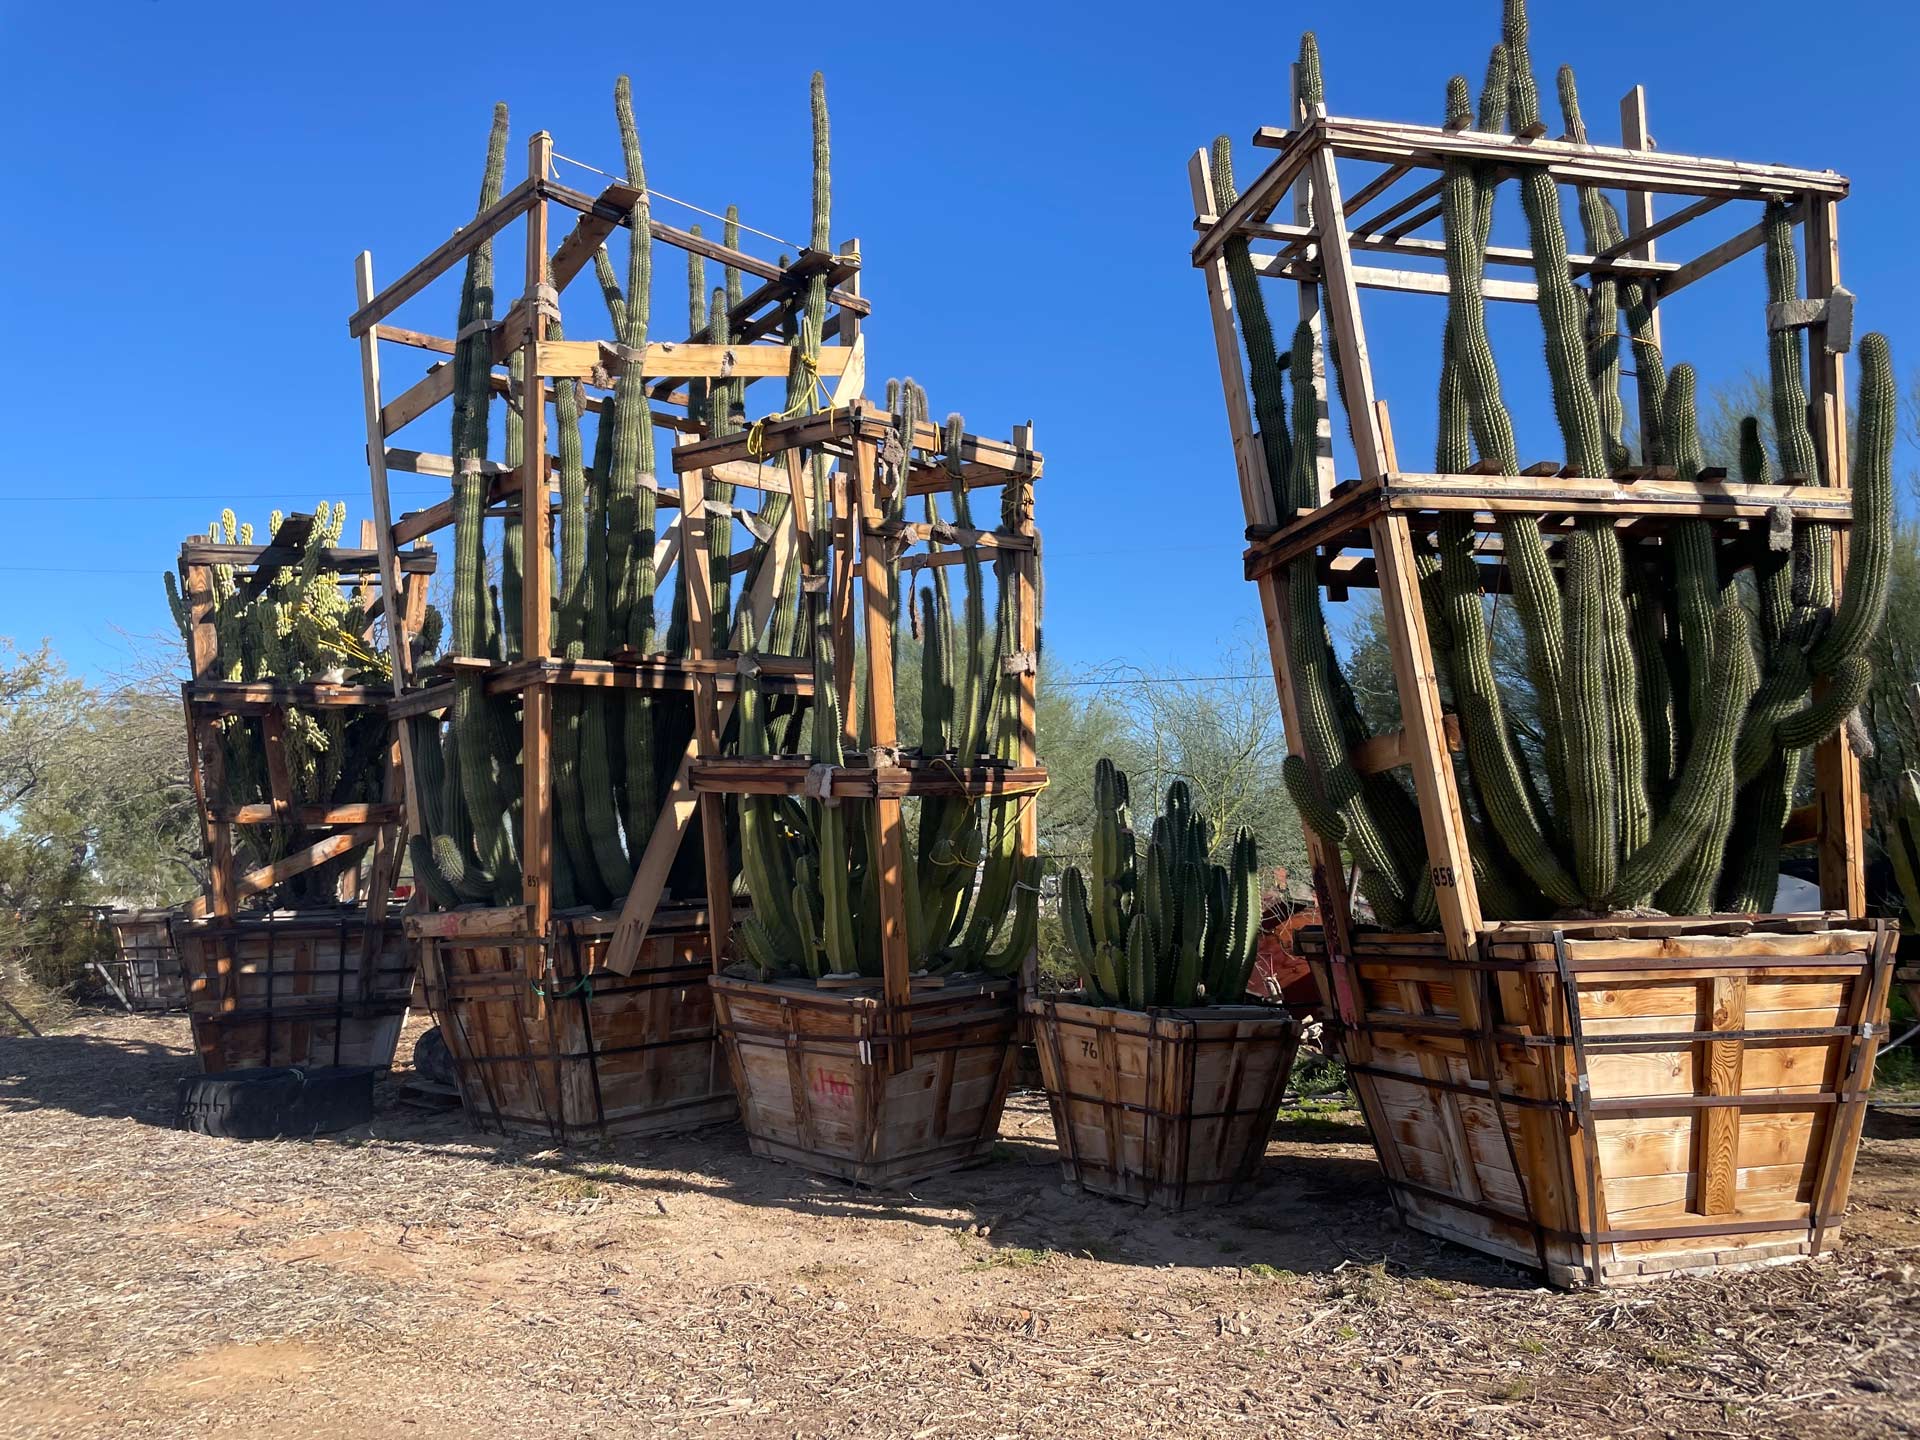 Organ Pipe cactuses at Native Resources